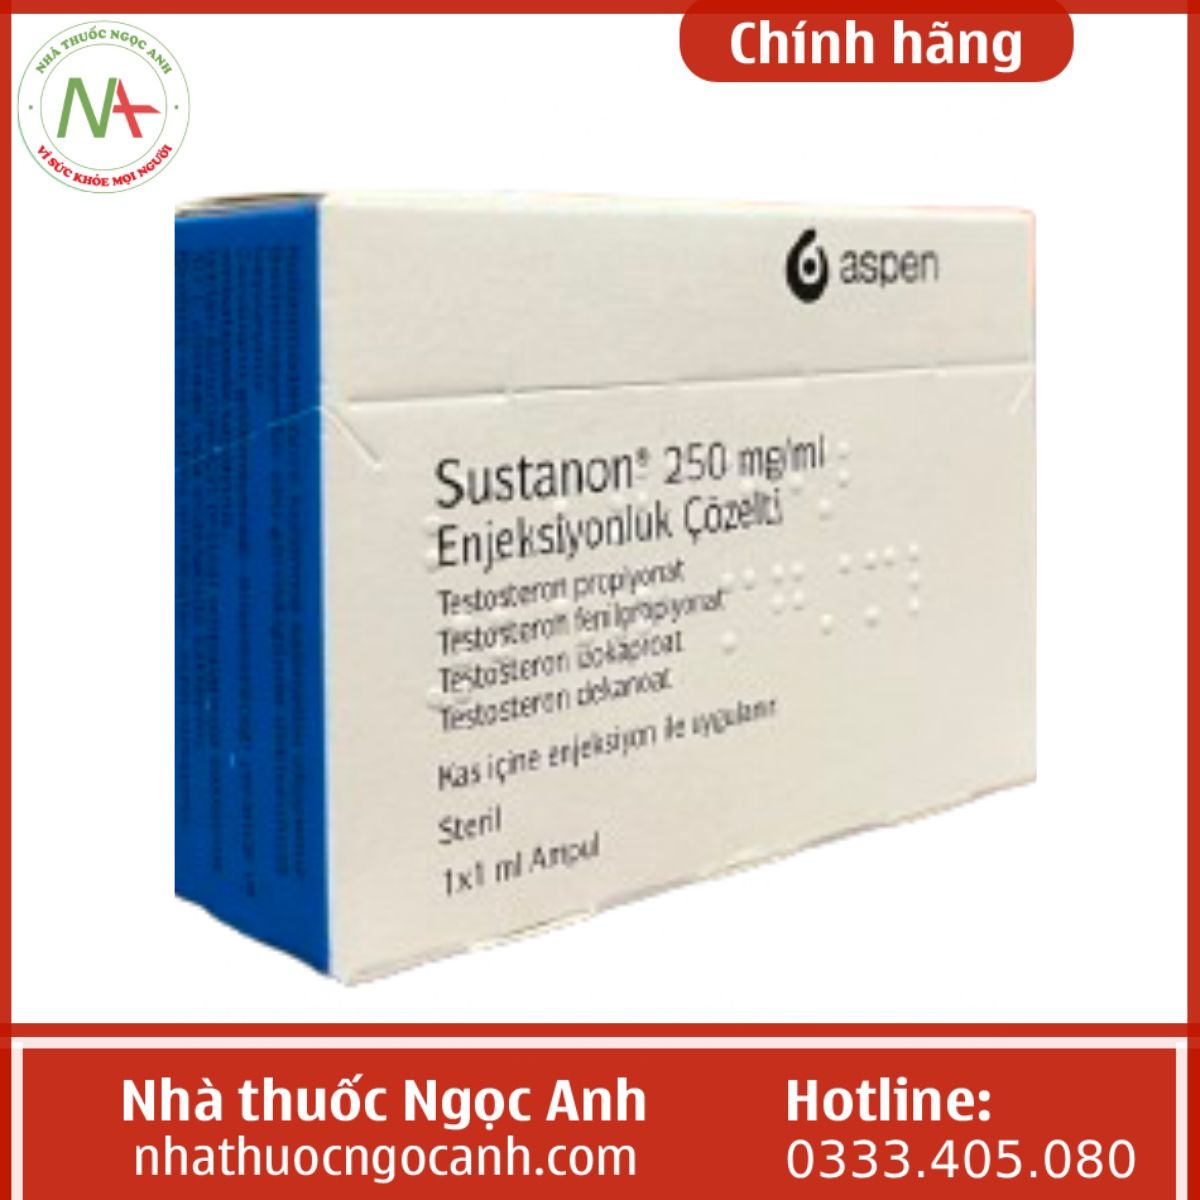 Sustanon 250 mg/ml